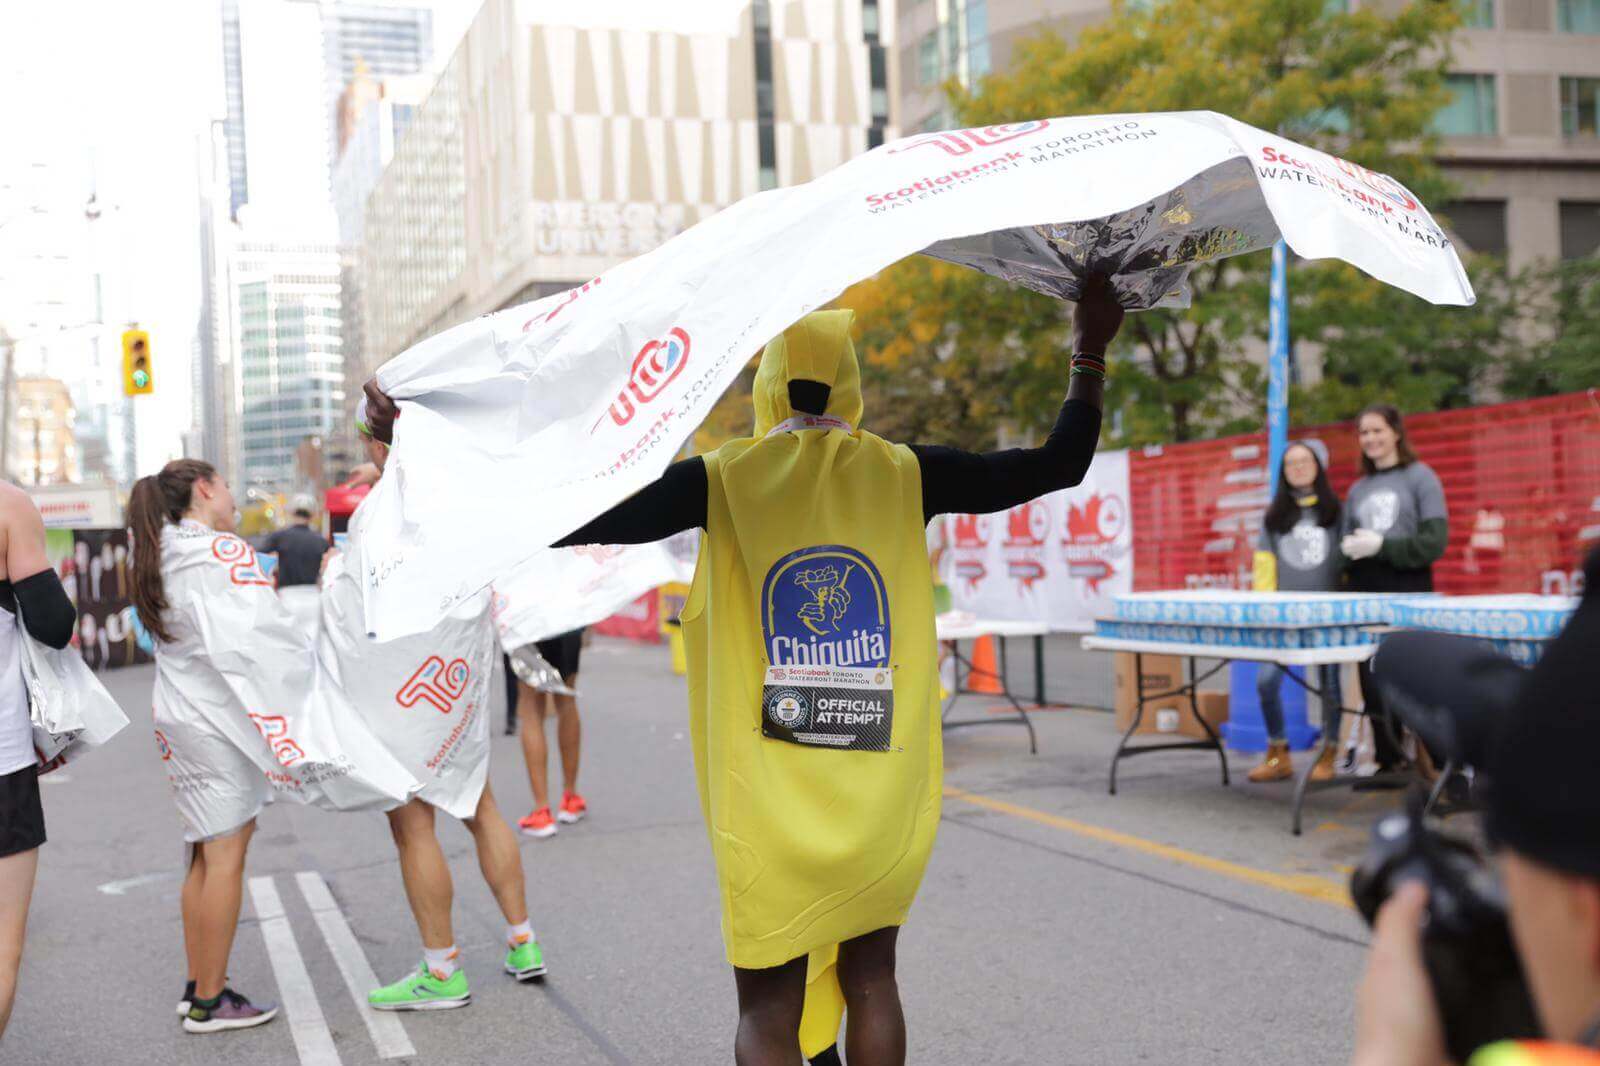 Hardloper in Chiquita bananenpak breekt wereldrecord halve marathon